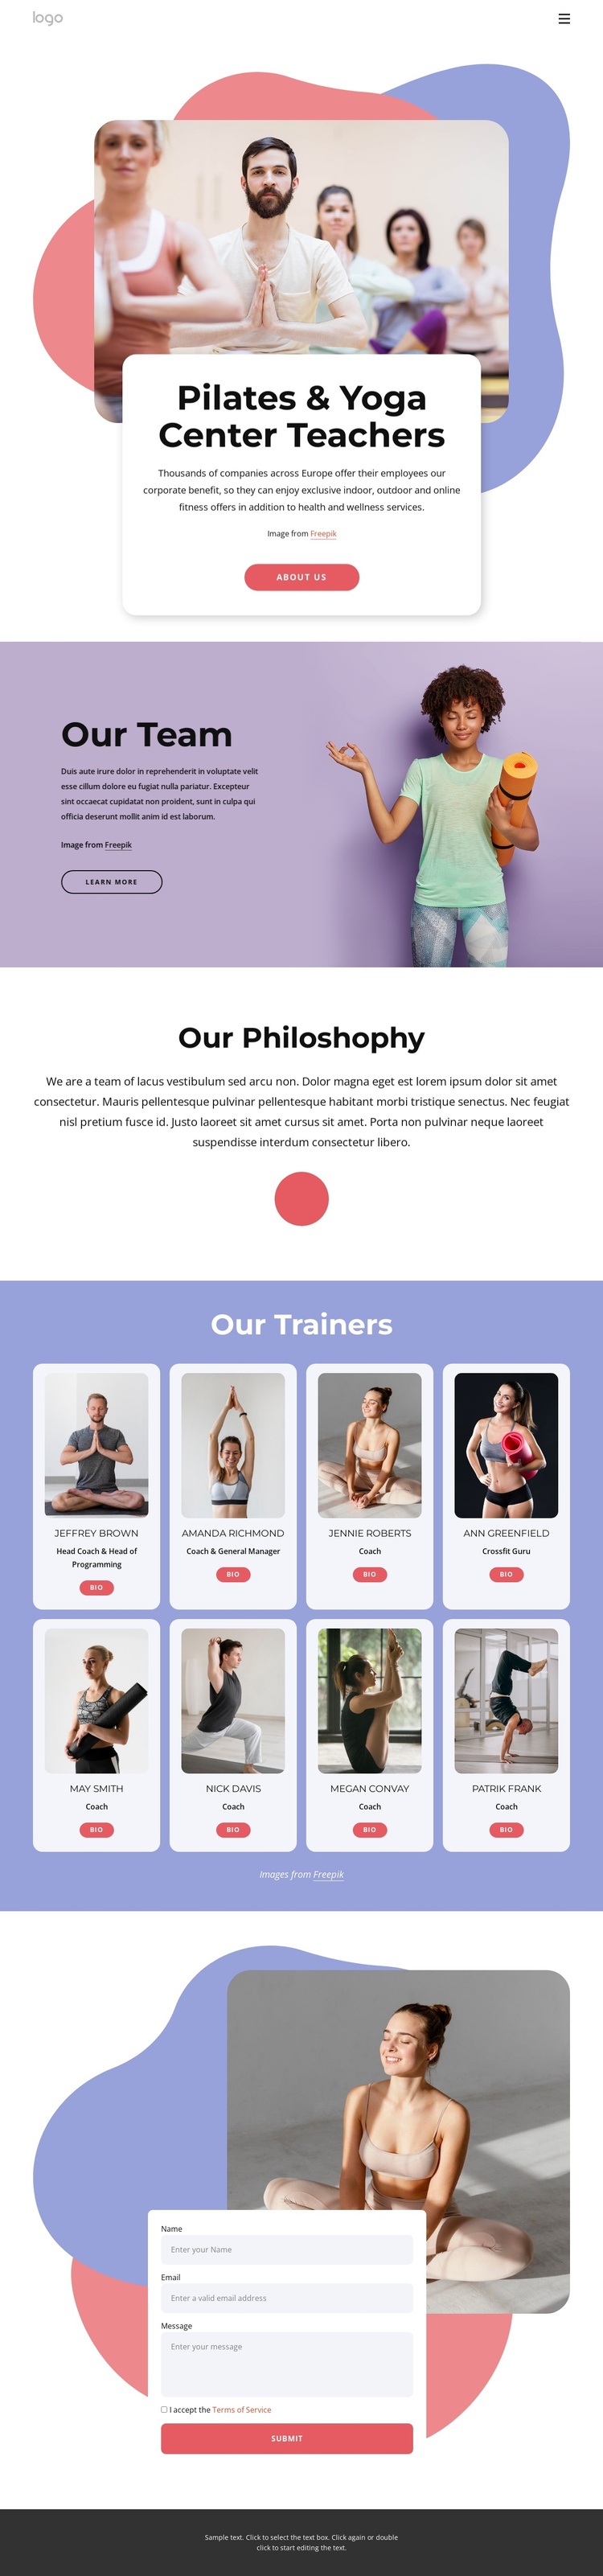 Pilates and yoga center teachers Joomla Template